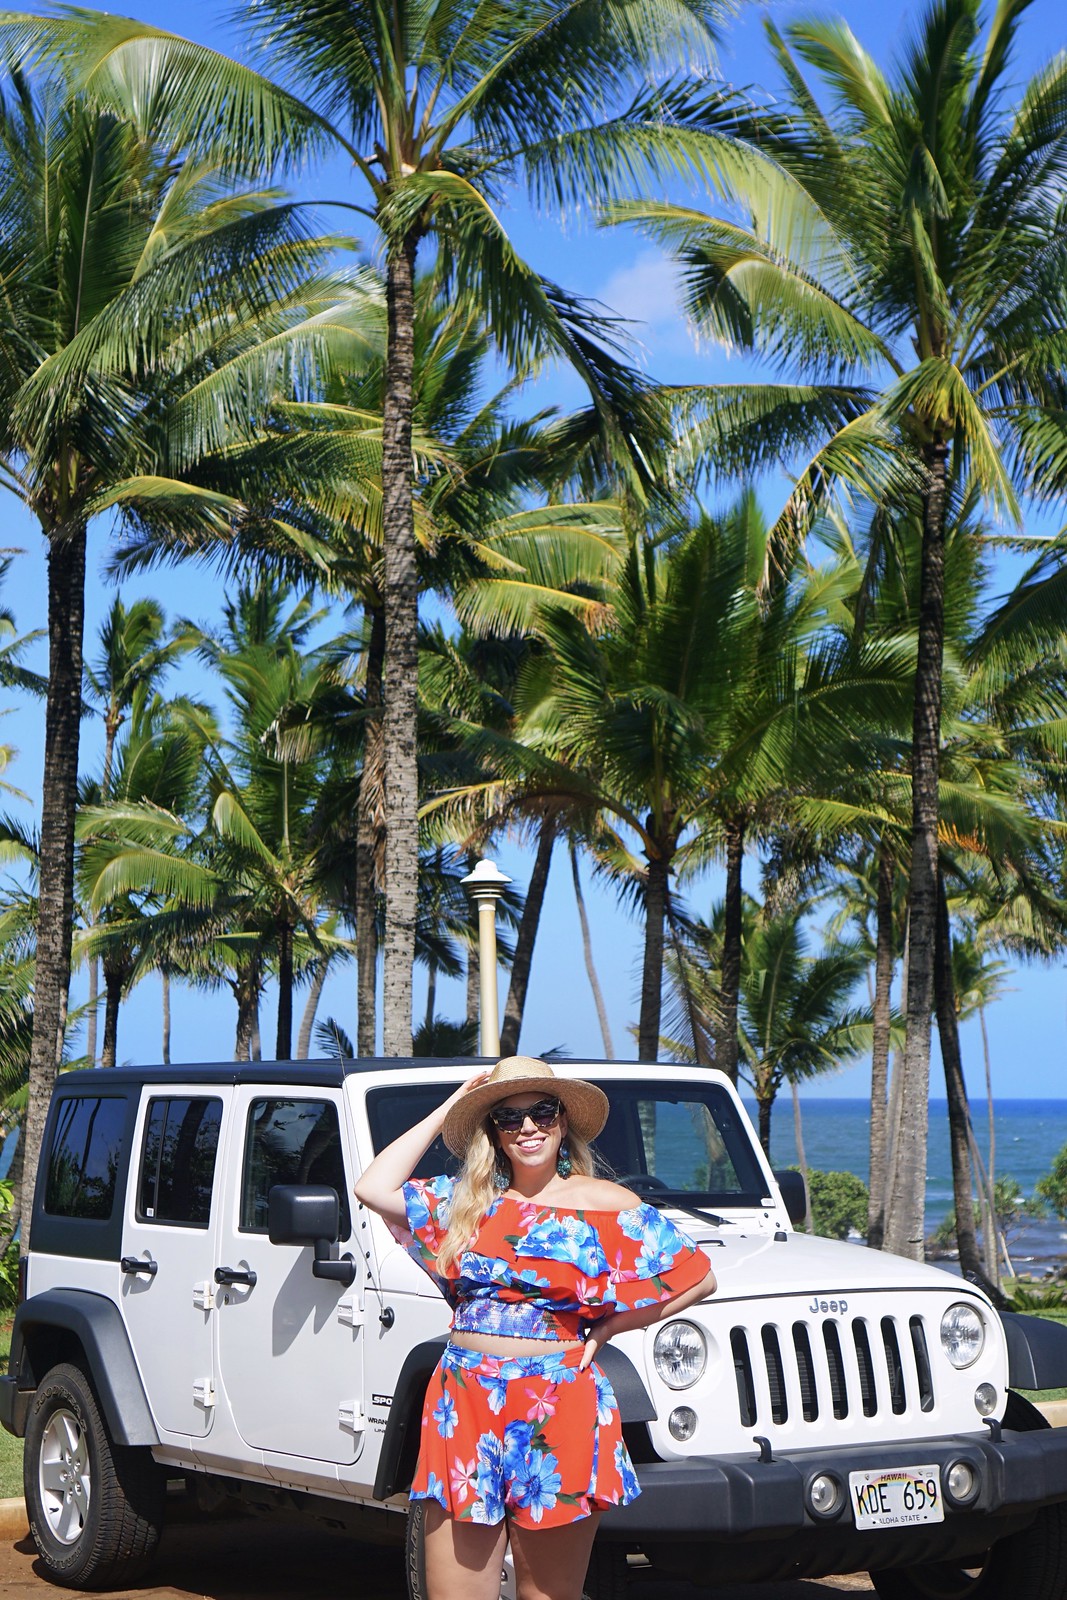 Red Floral Two Piece Set White Jeep Hawaii Outfit Hilton Garden Inn Kauai Wailua Bay Best Things to do in Kauai Hawaii